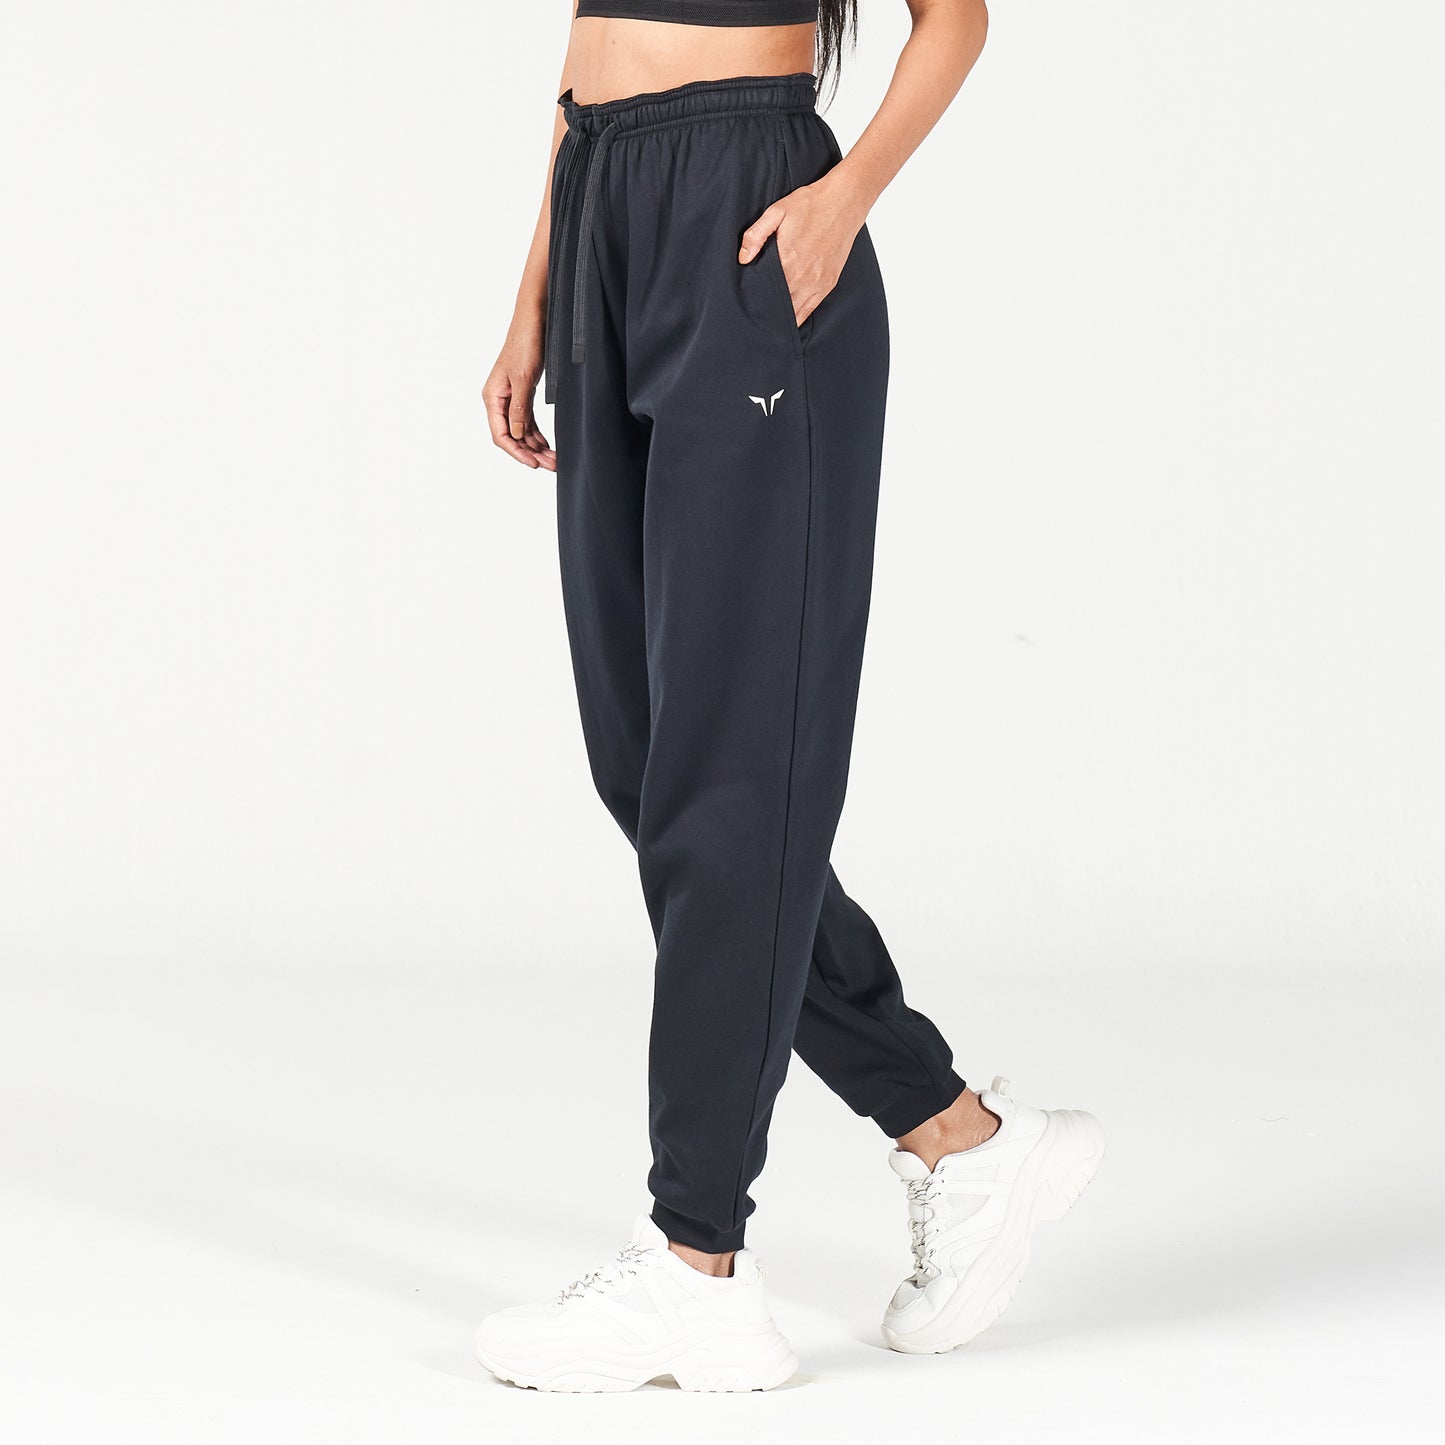 squatwolf-workout-clothes-waistband-surprise-joggers-black-gym-pants-for-women